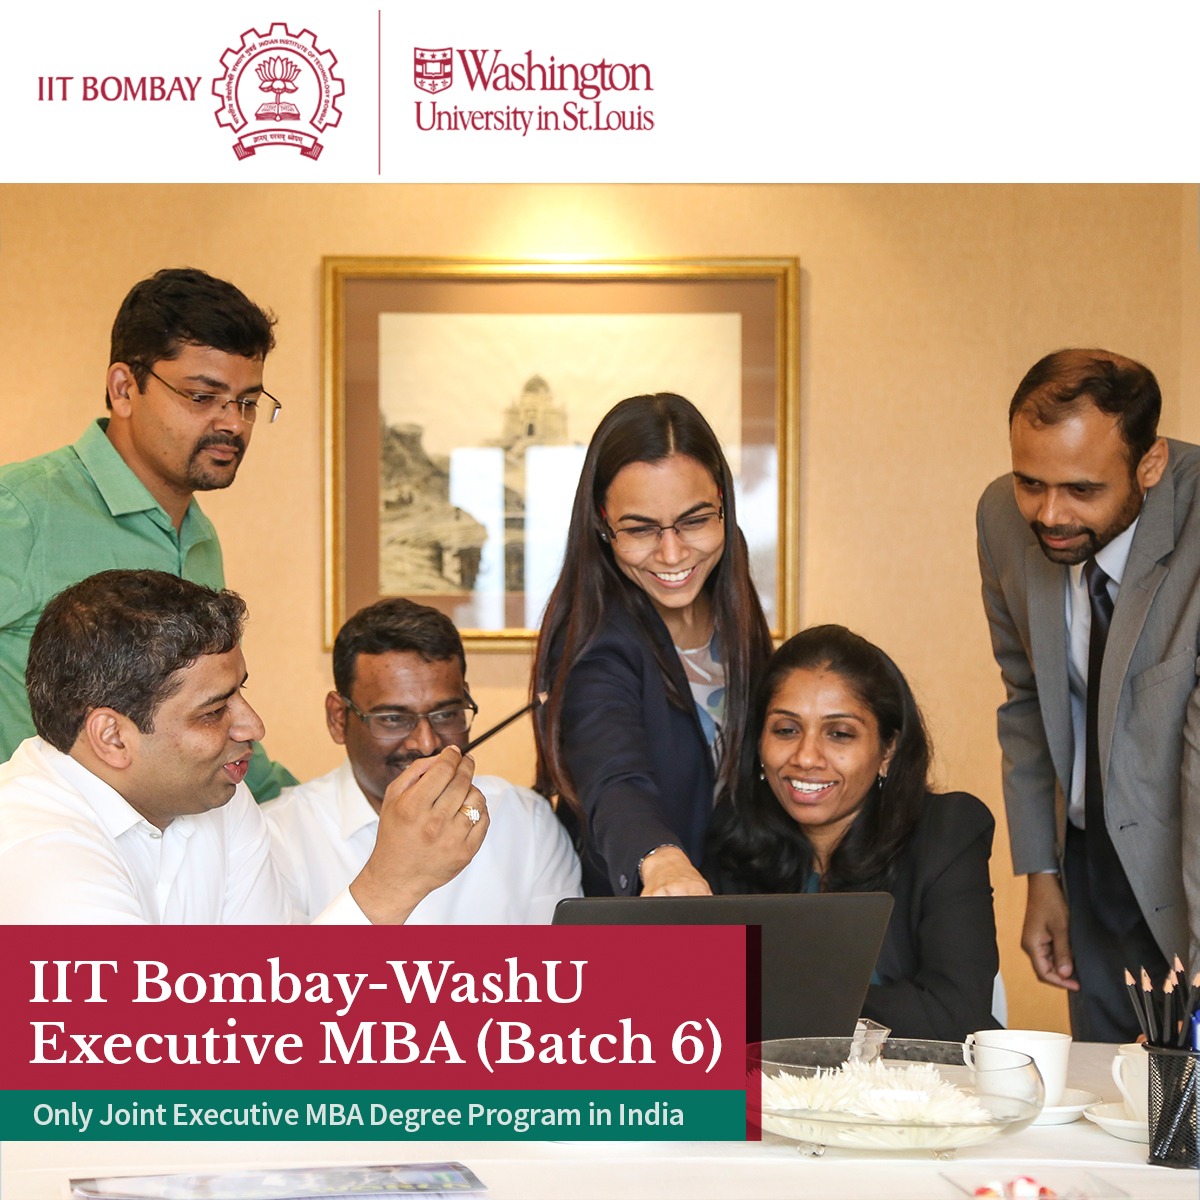 IIT Bombay & Washington University in St. Louis start EMBA batch 7